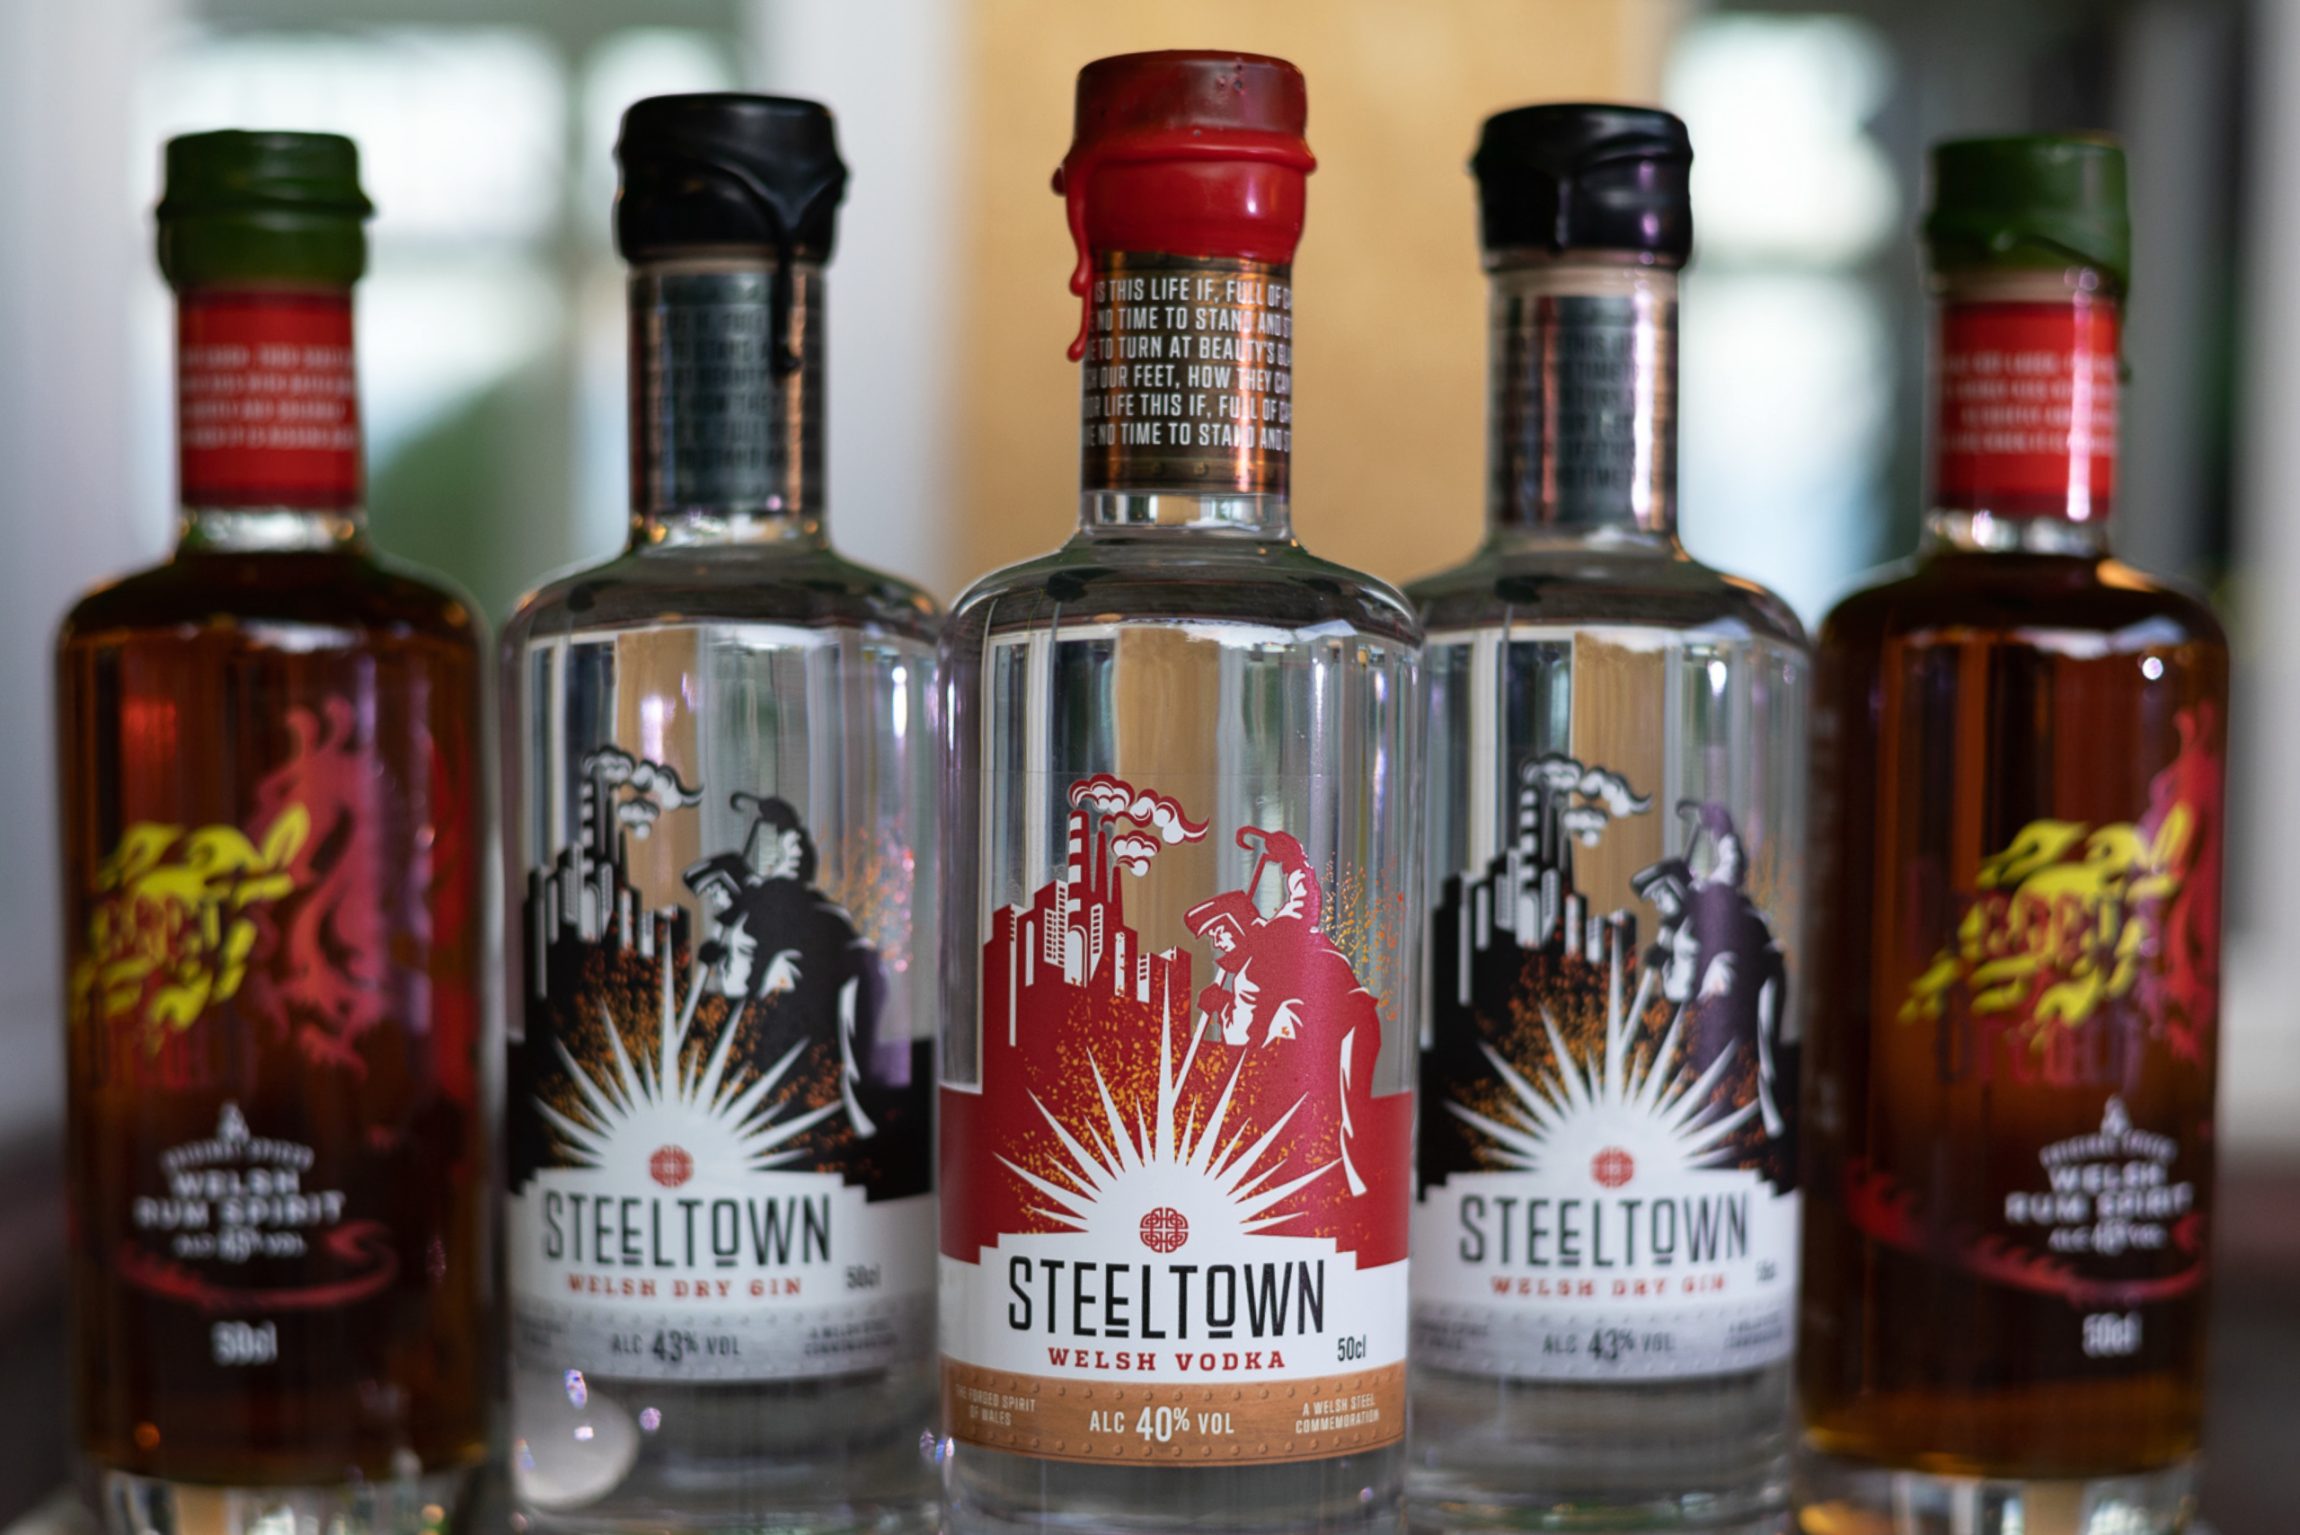 Spirit of Wales distillery introduces their award winning Steeltown Welsh Dry Gin